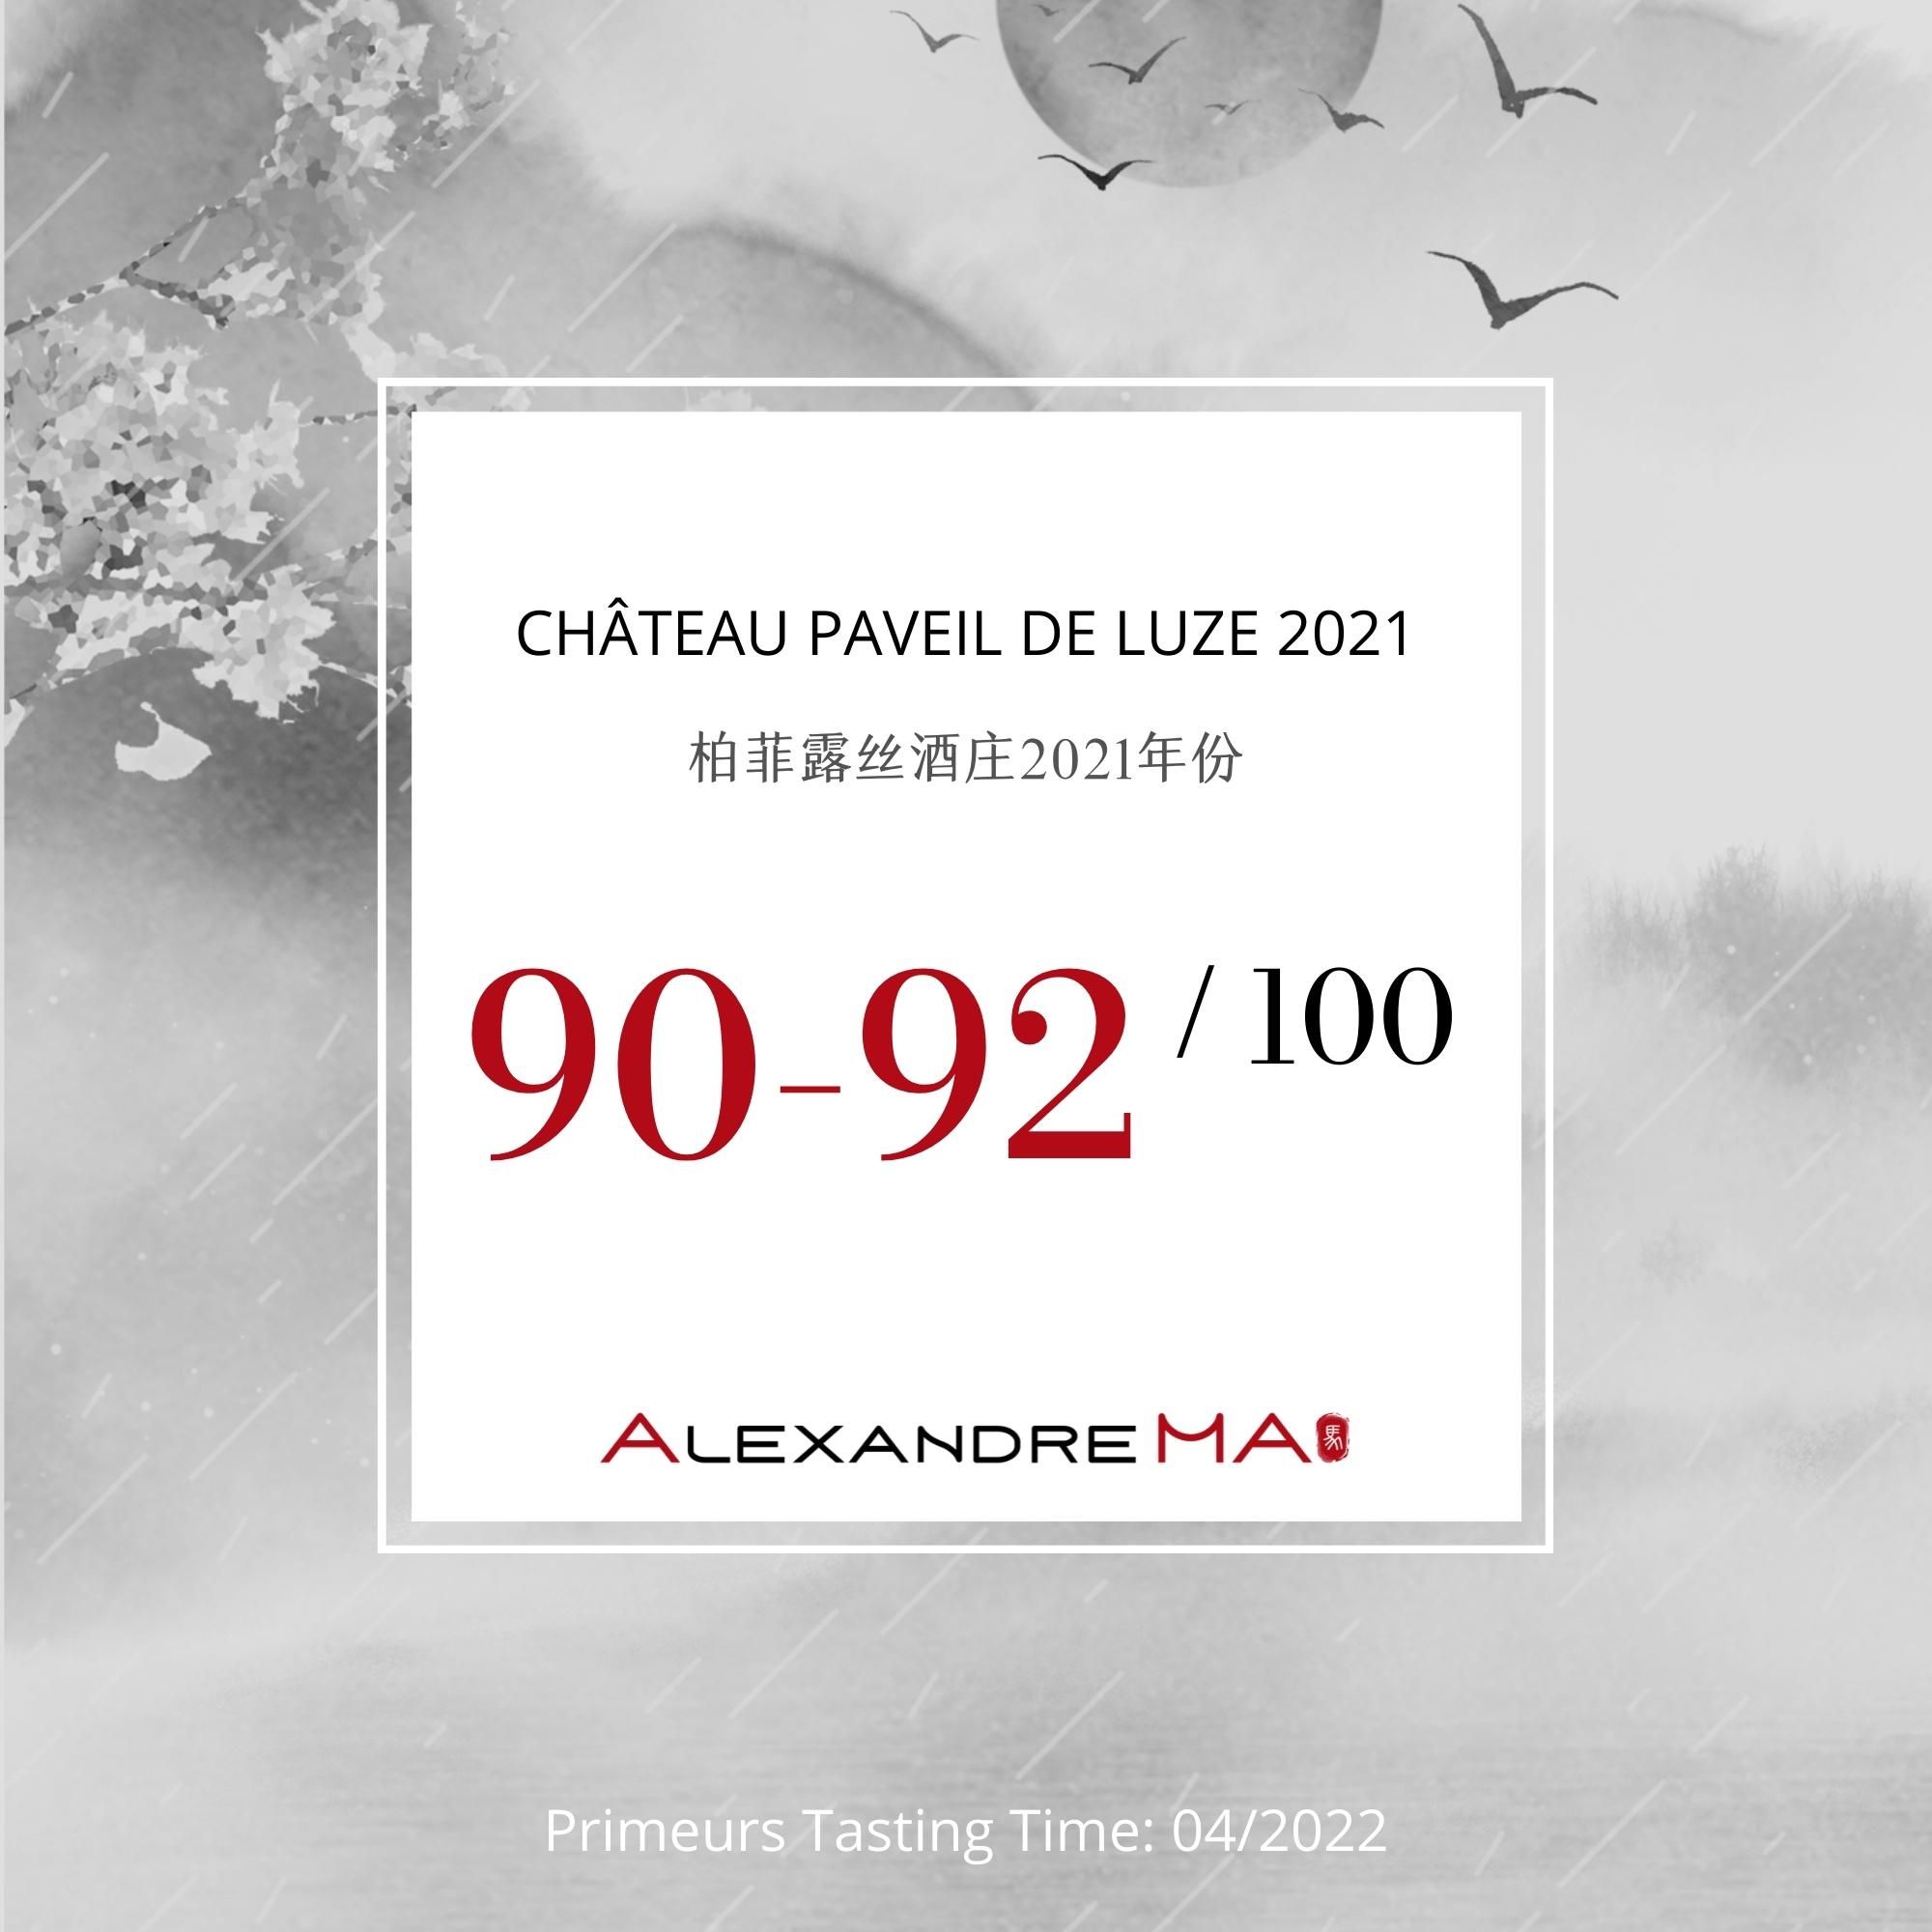 Château Paveil de Luze 2021 柏菲露丝酒庄 - Alexandre Ma